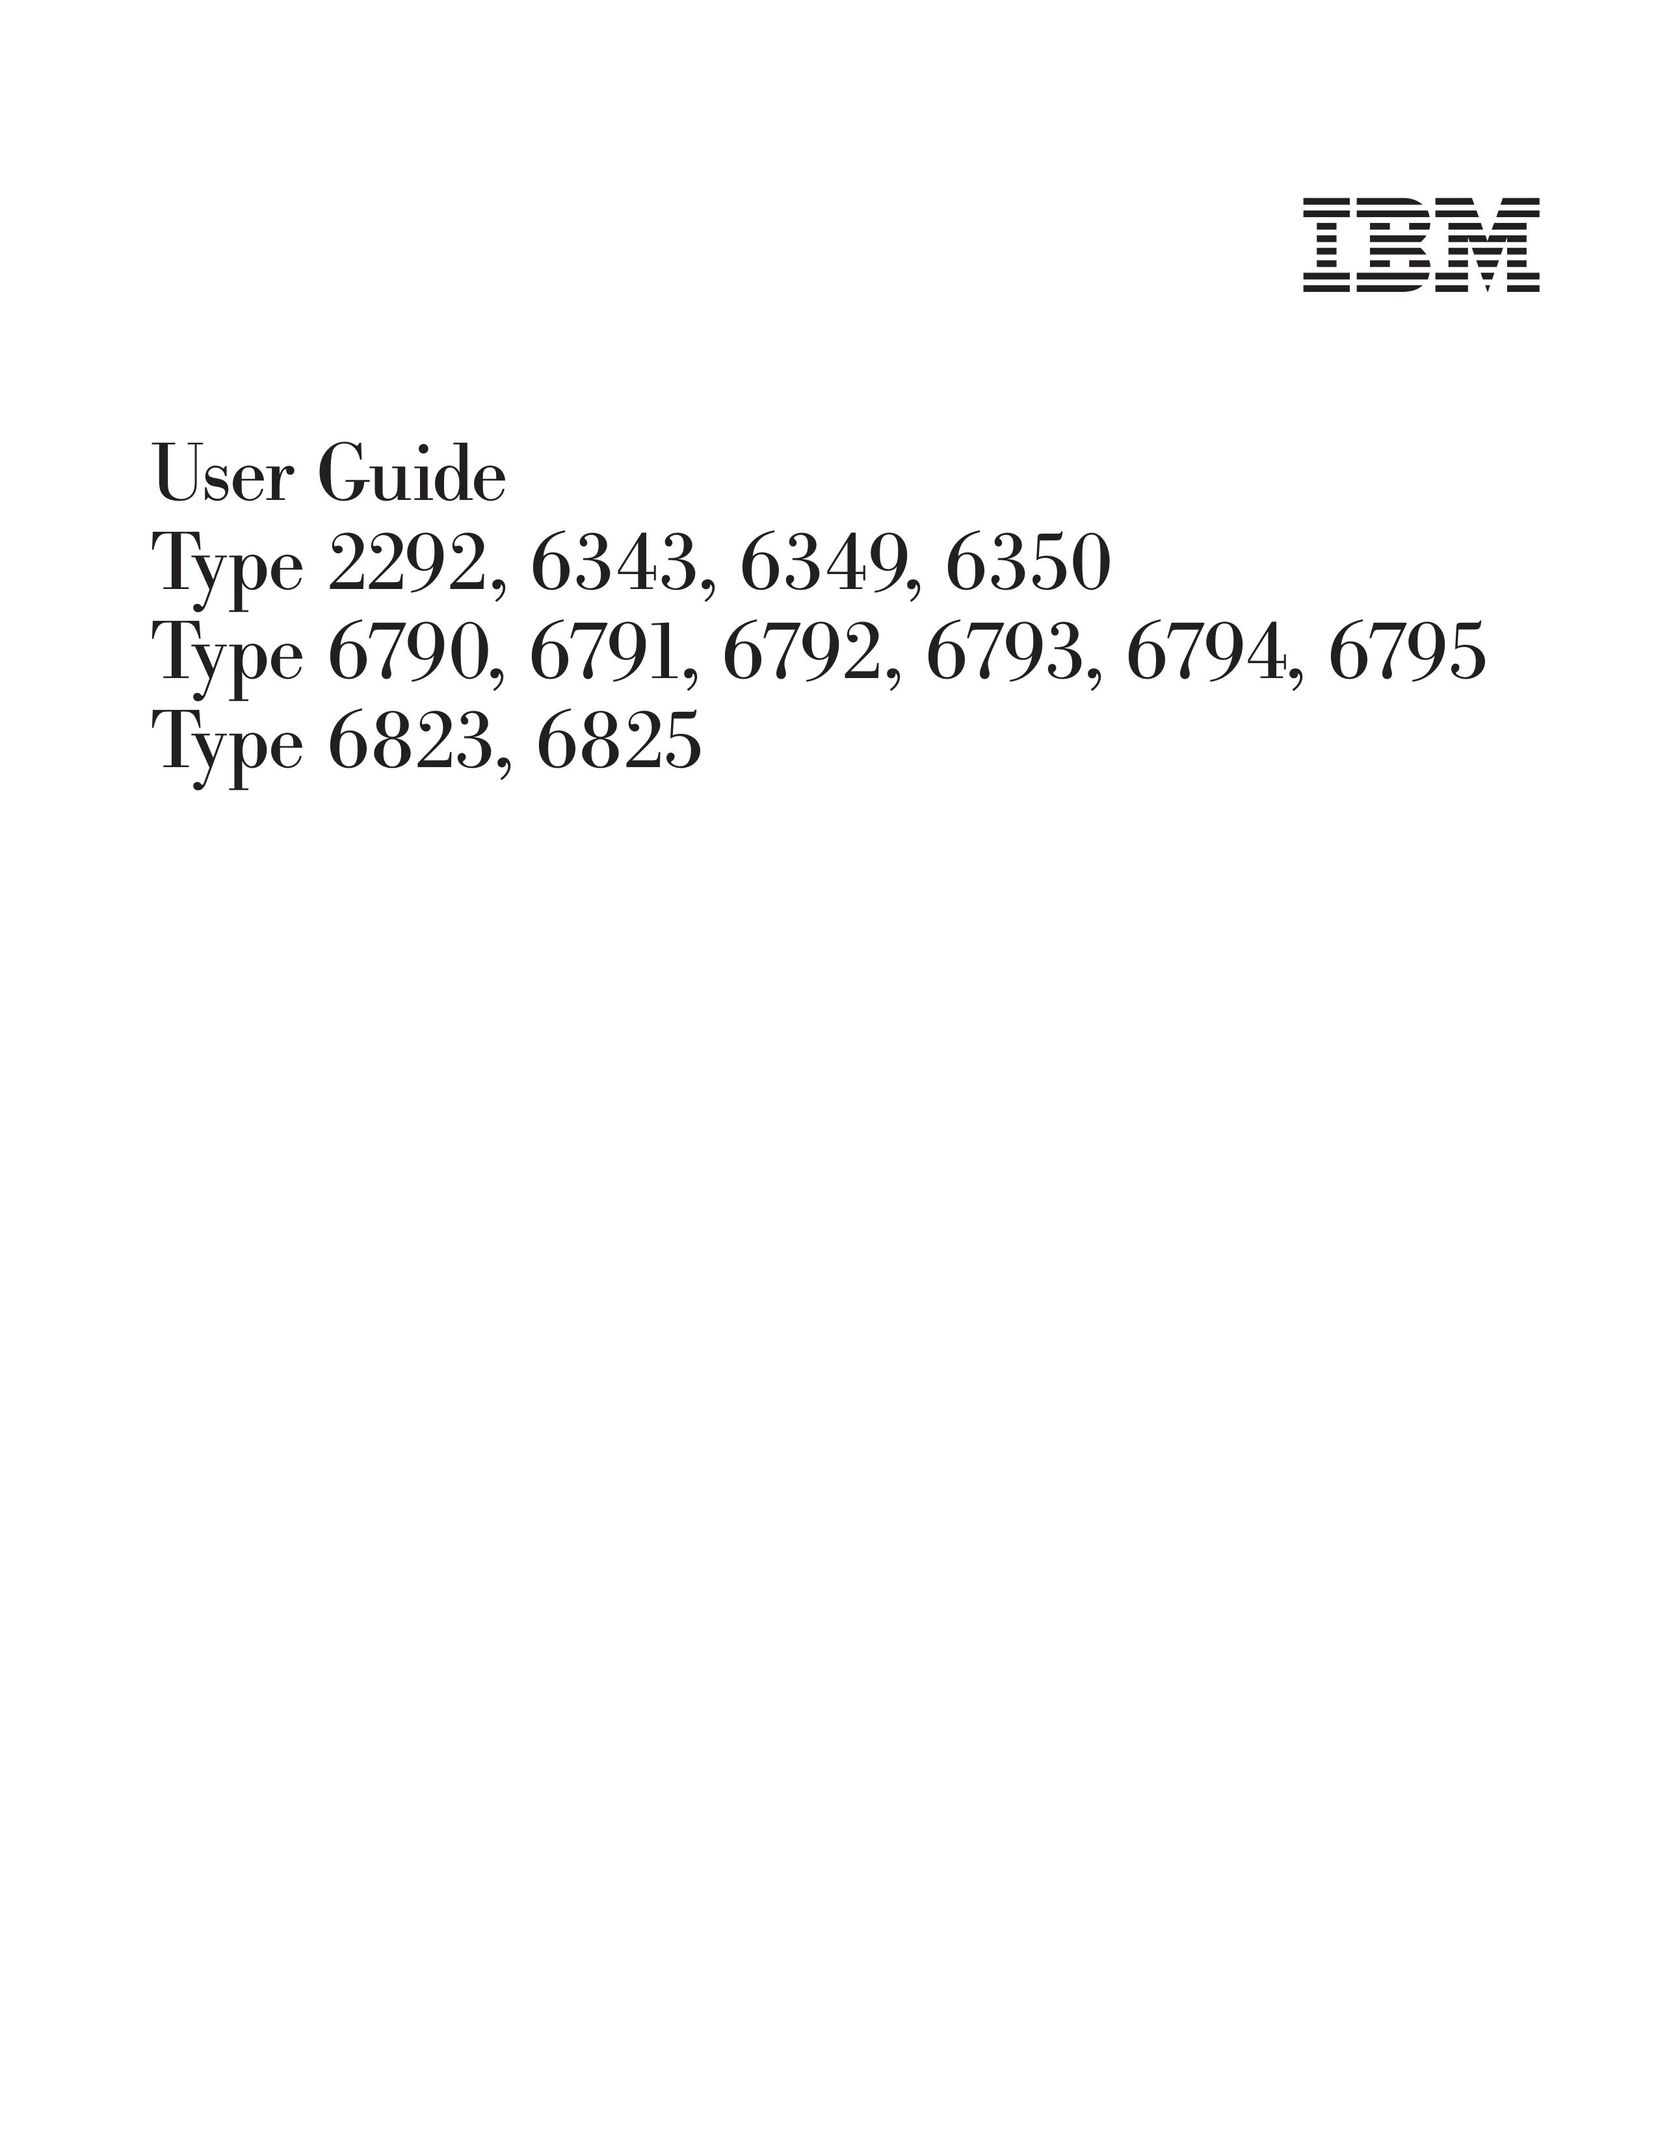 IBM Partner Pavilion 2292 Personal Computer User Manual